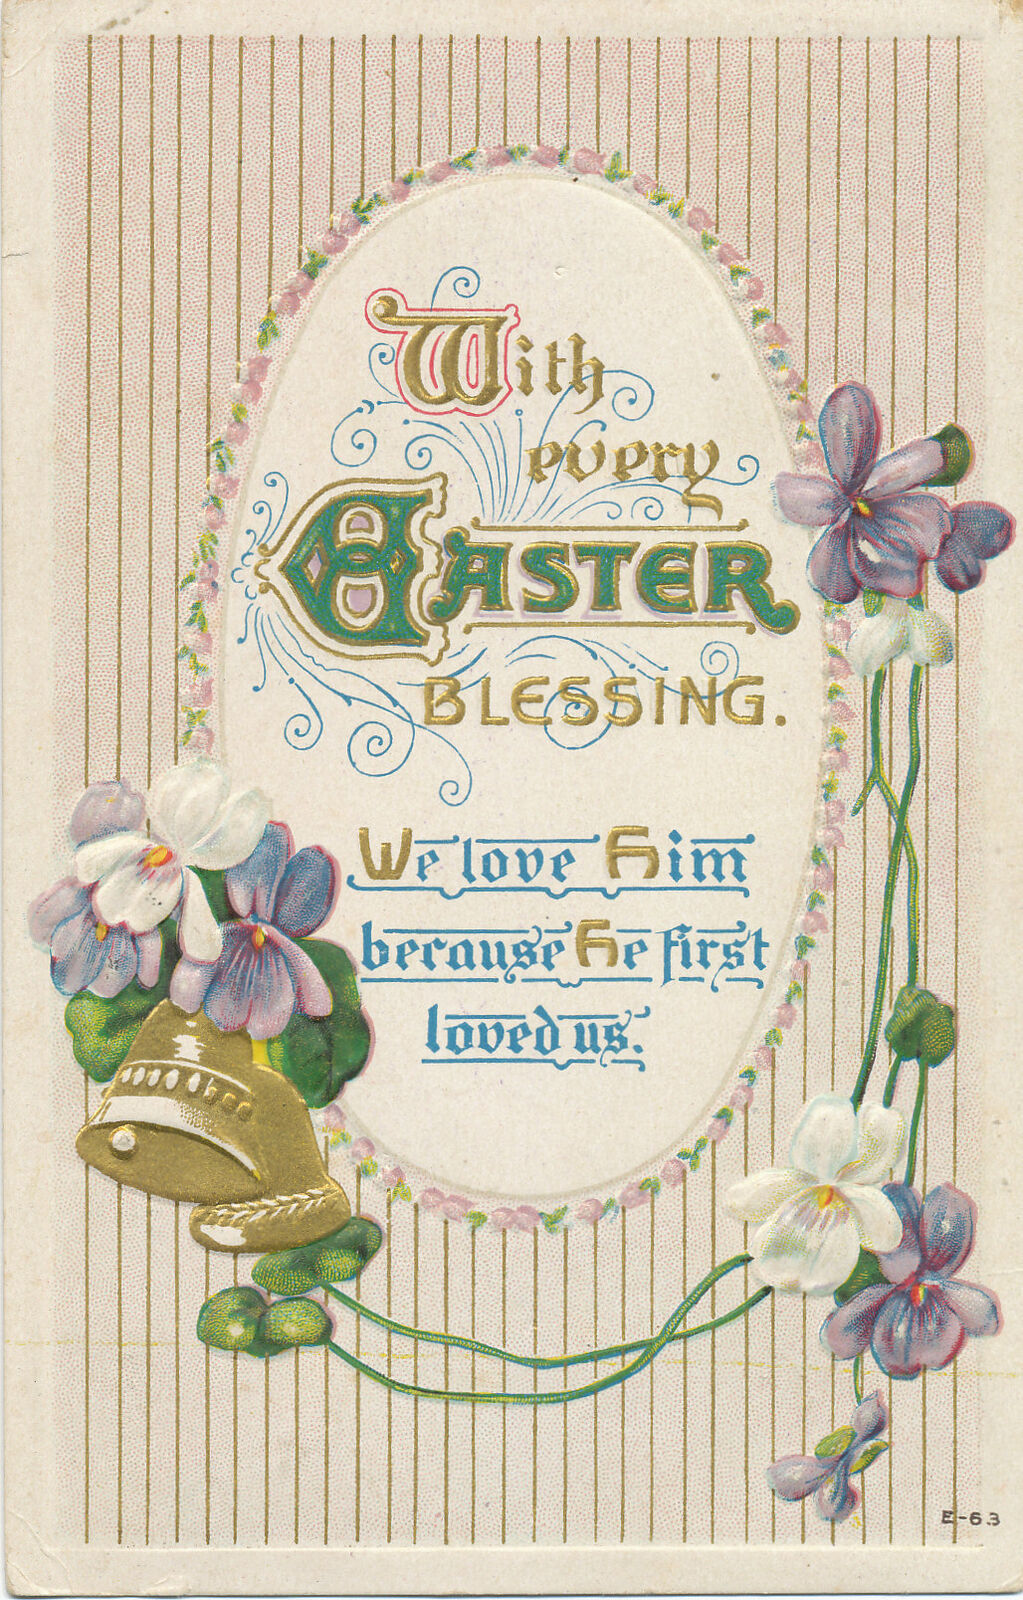 EASTER BLESSINGS - Postcard - BELLS FLOWERS -WE LOVE HIM BECAUSE - 1915